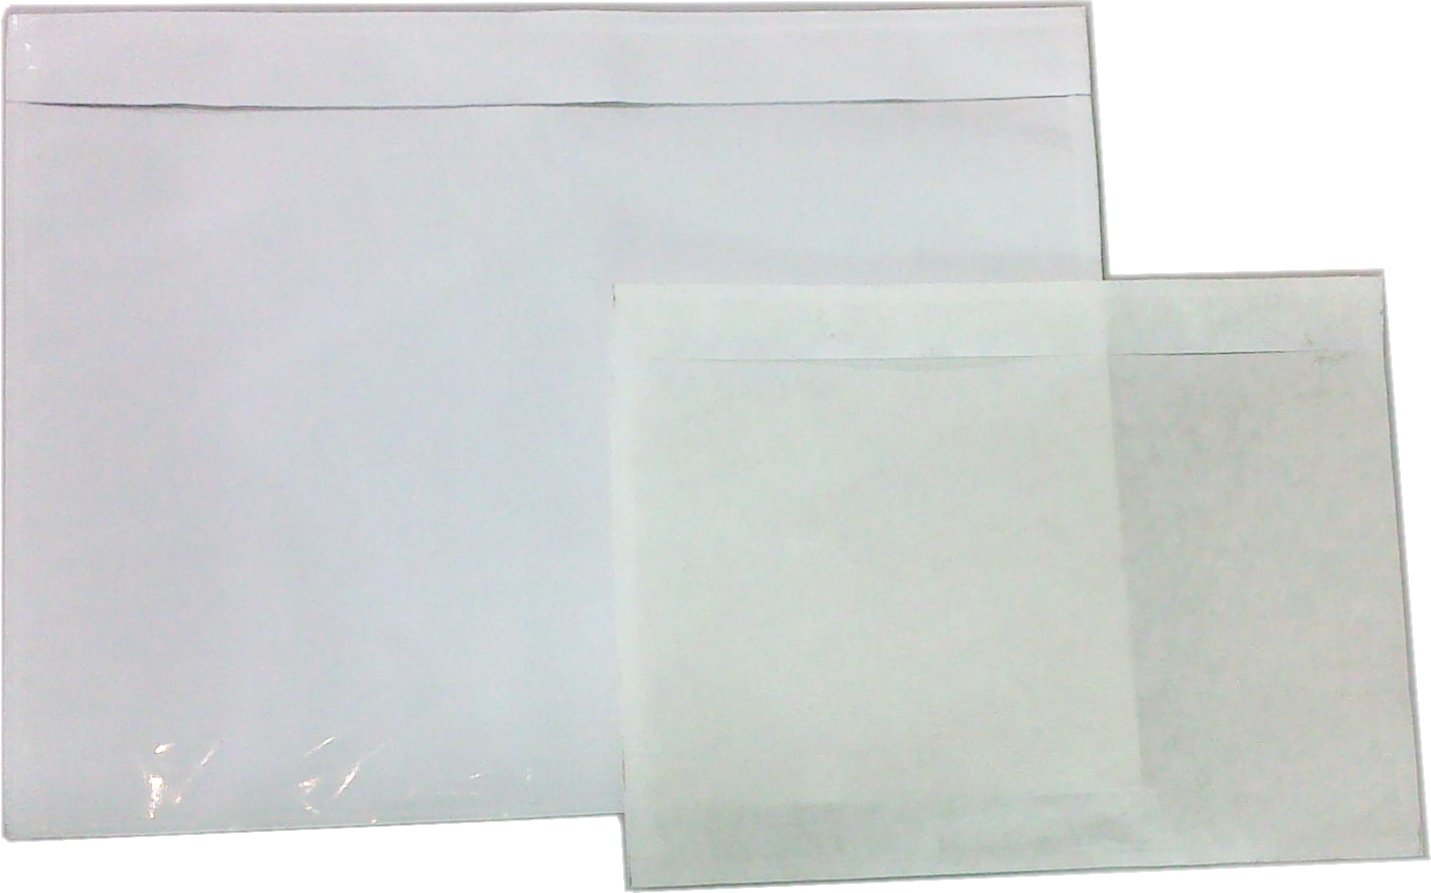 4.5 x 5.5 Blank Packing List
Envelopes 1000/Ctn